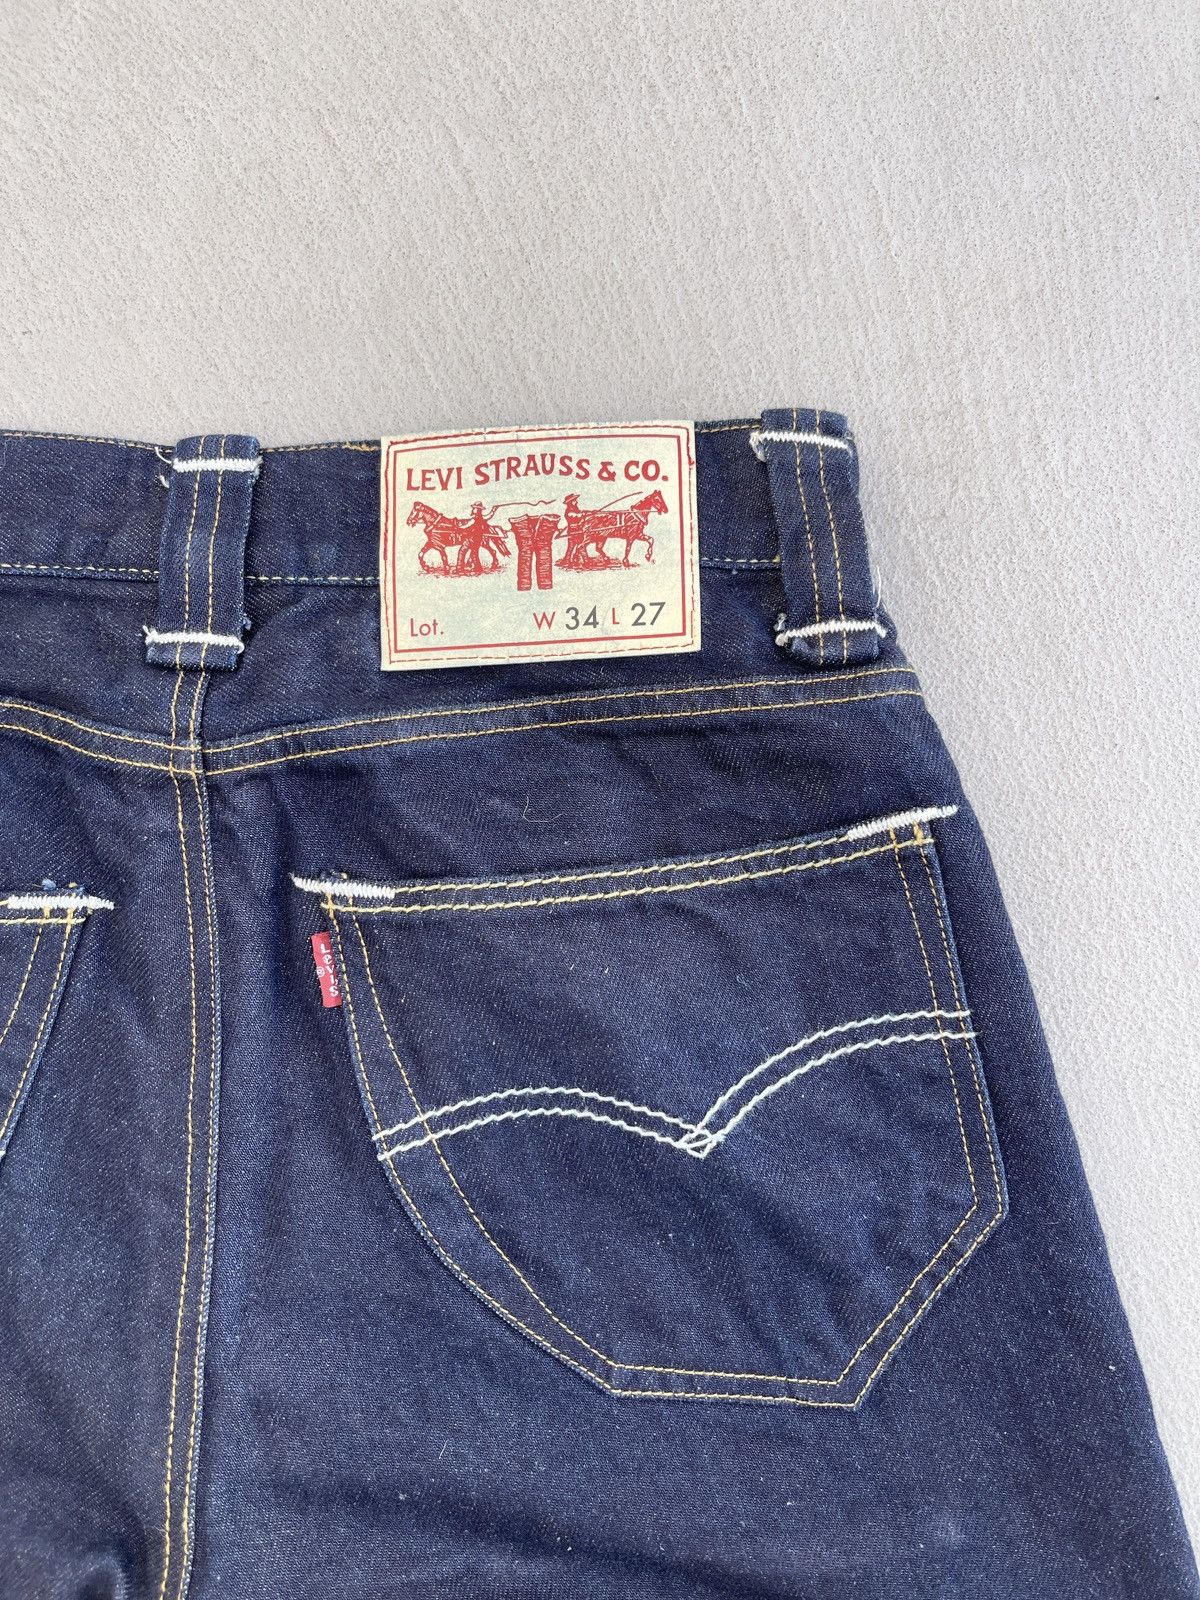 Vintage 2010s Junya Watanabe x Levi's Cropped Jeans - 7